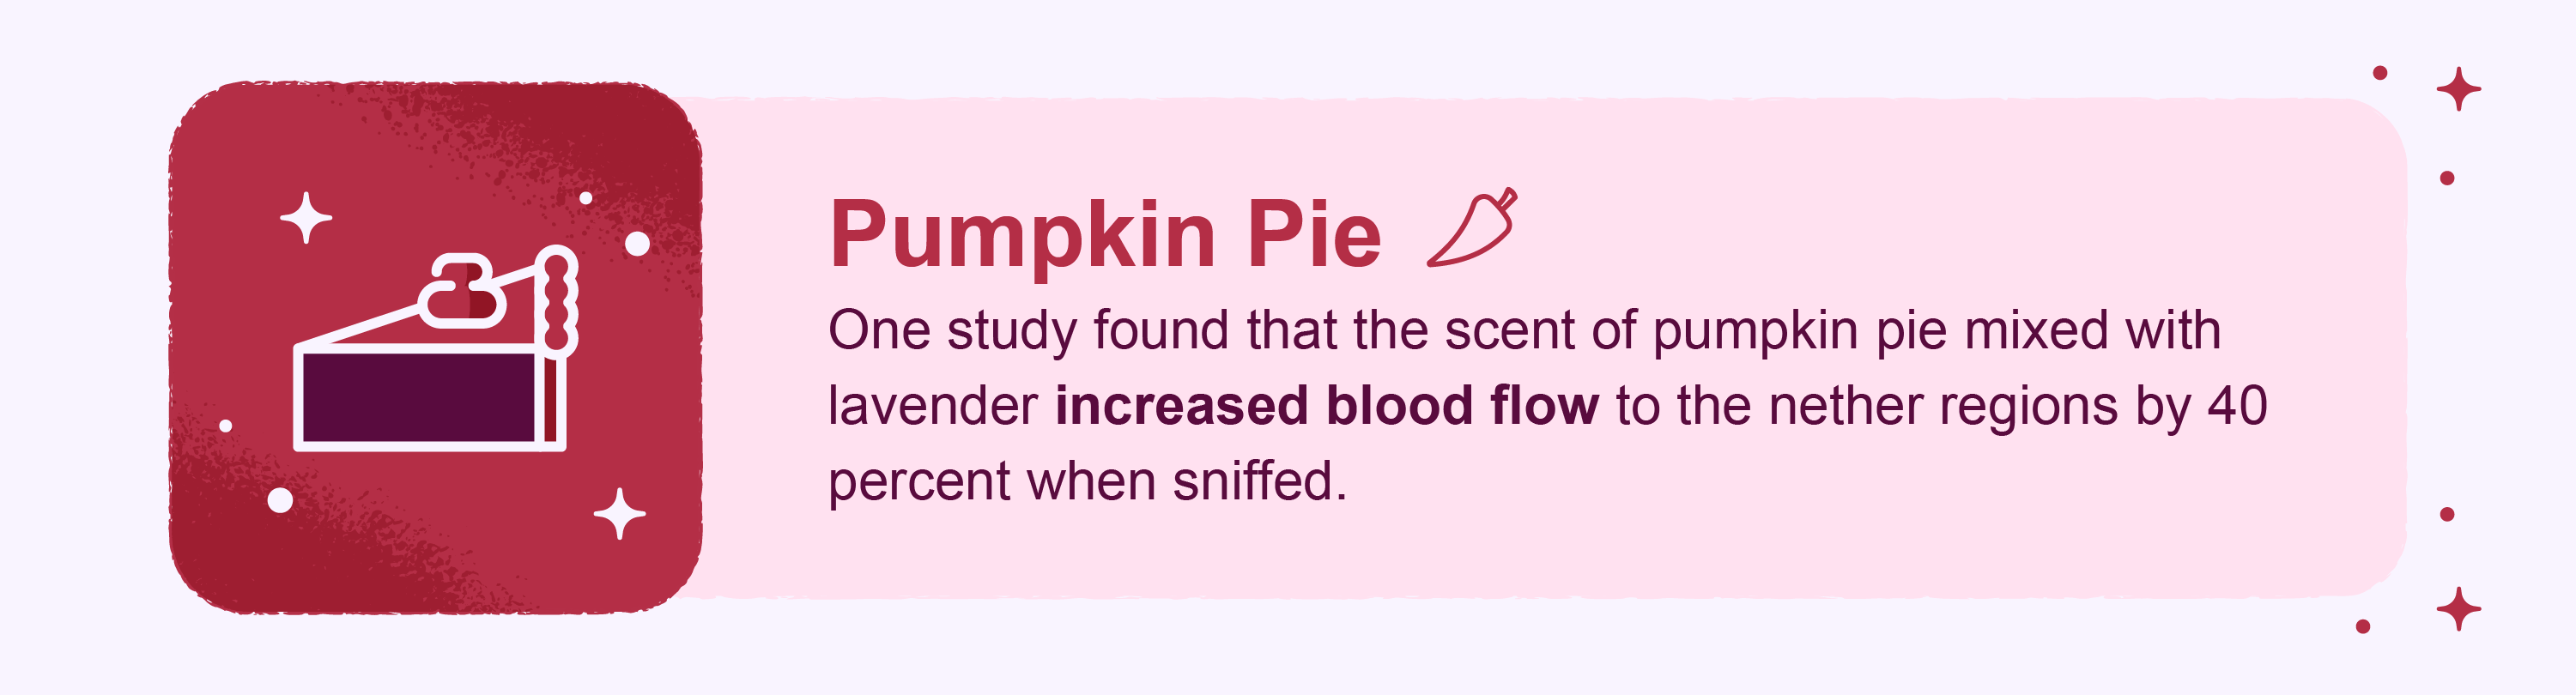 pumpkin pie scent fact